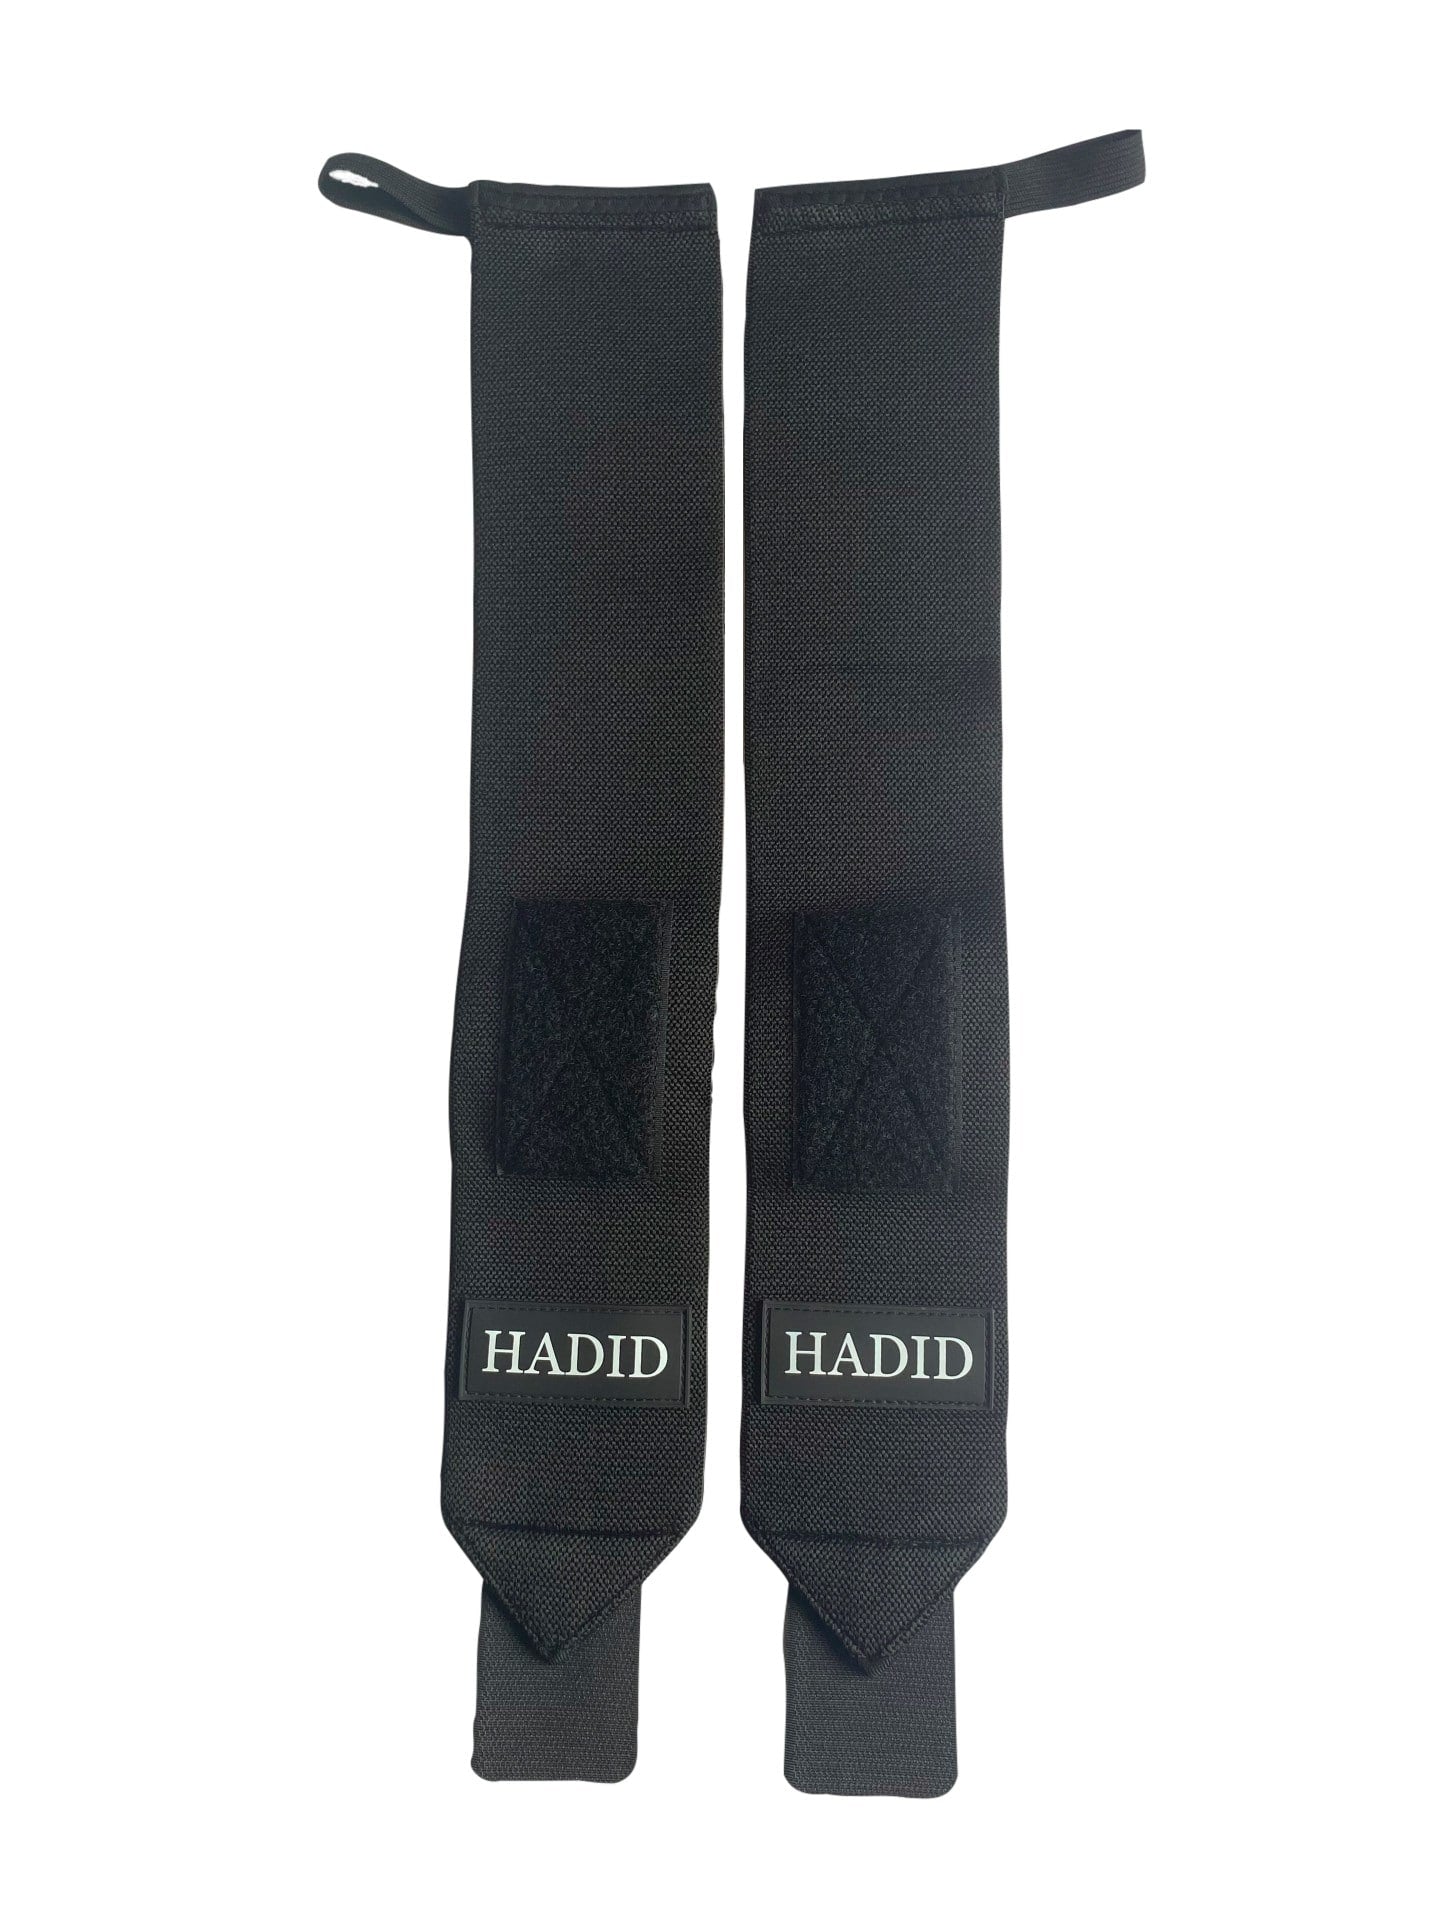 Hadid Wrist Wraps Black Flat